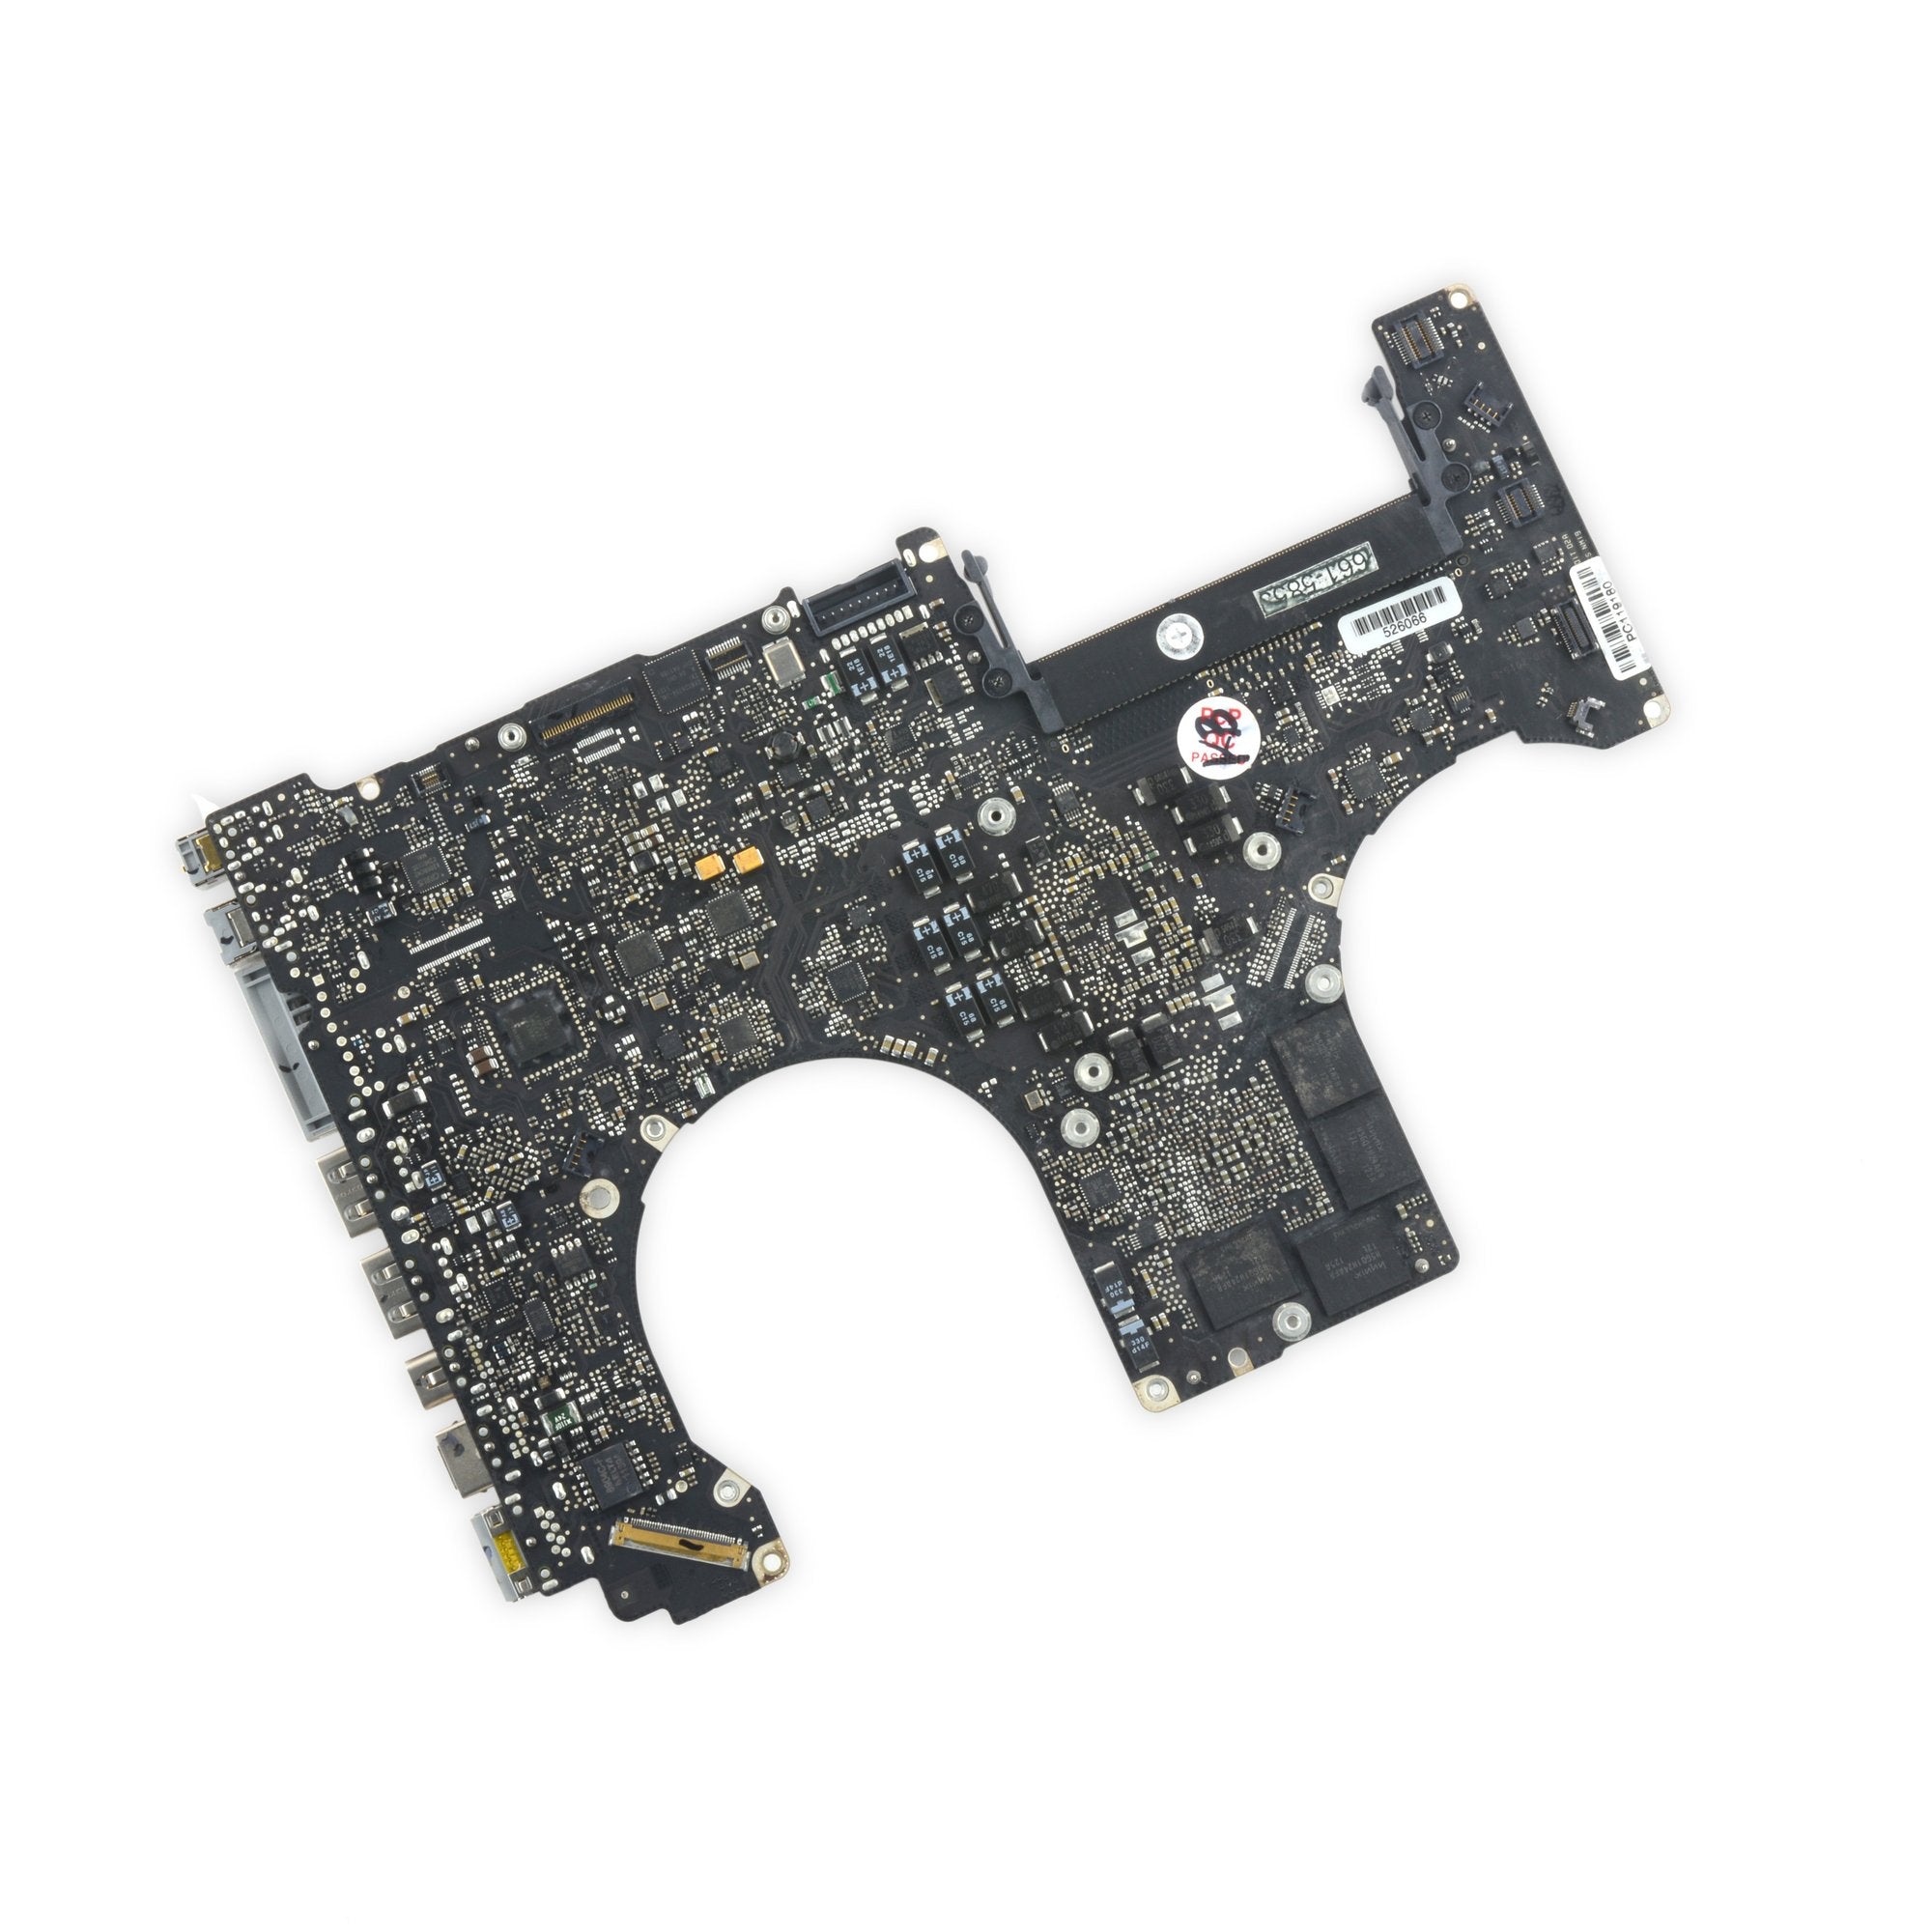 MacBook Pro 15" Unibody (Early 2011) 2.3 GHz Logic Board